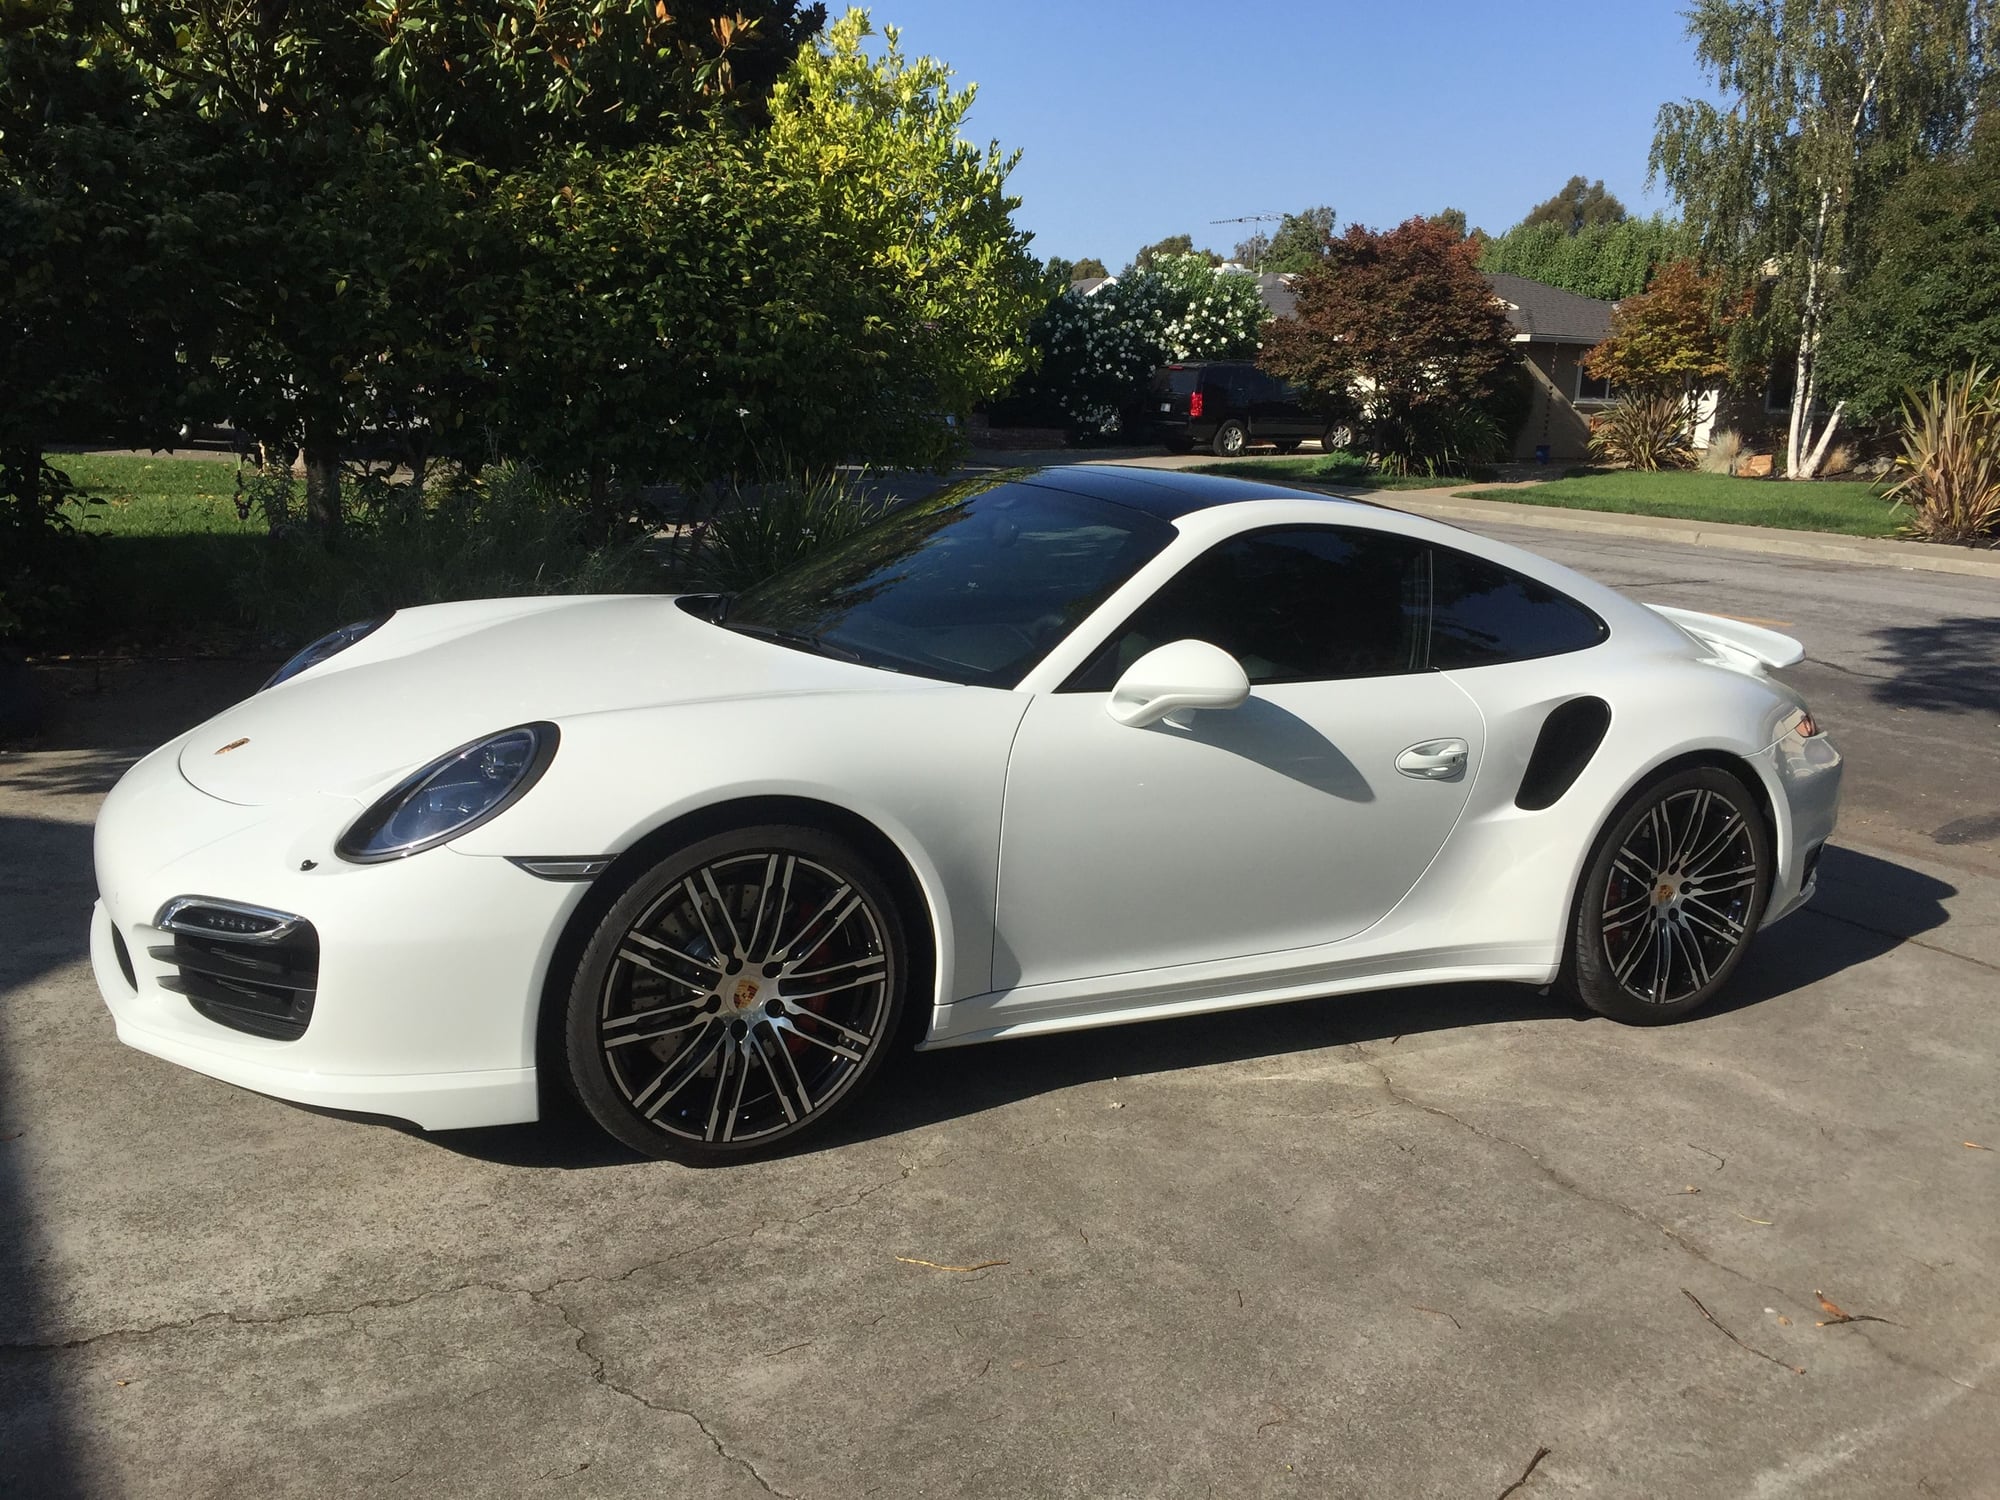 2016 Porsche 911 - Porsche 911 Turbo - Warranty / prepaid maintenance until 7/2020 - Used - VIN WPOAD2A95GS166627 - Coupe - White - Mountain View, CA 94040, United States